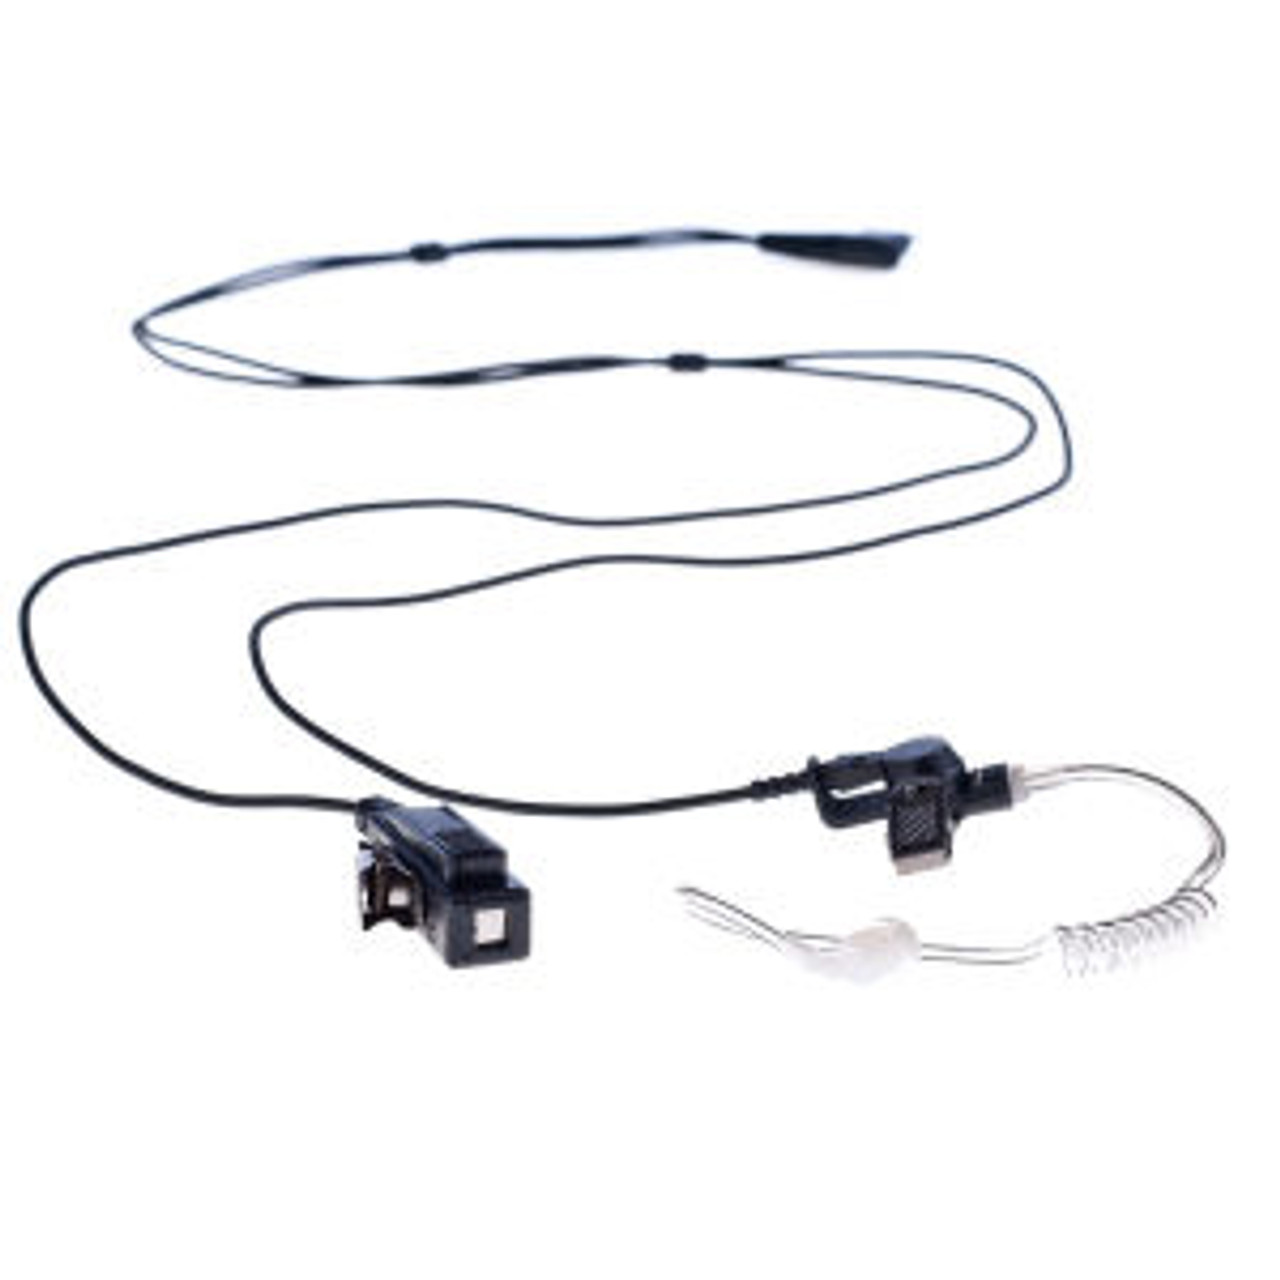 ICOM IC-F70 2-Wire Surveillance Kit